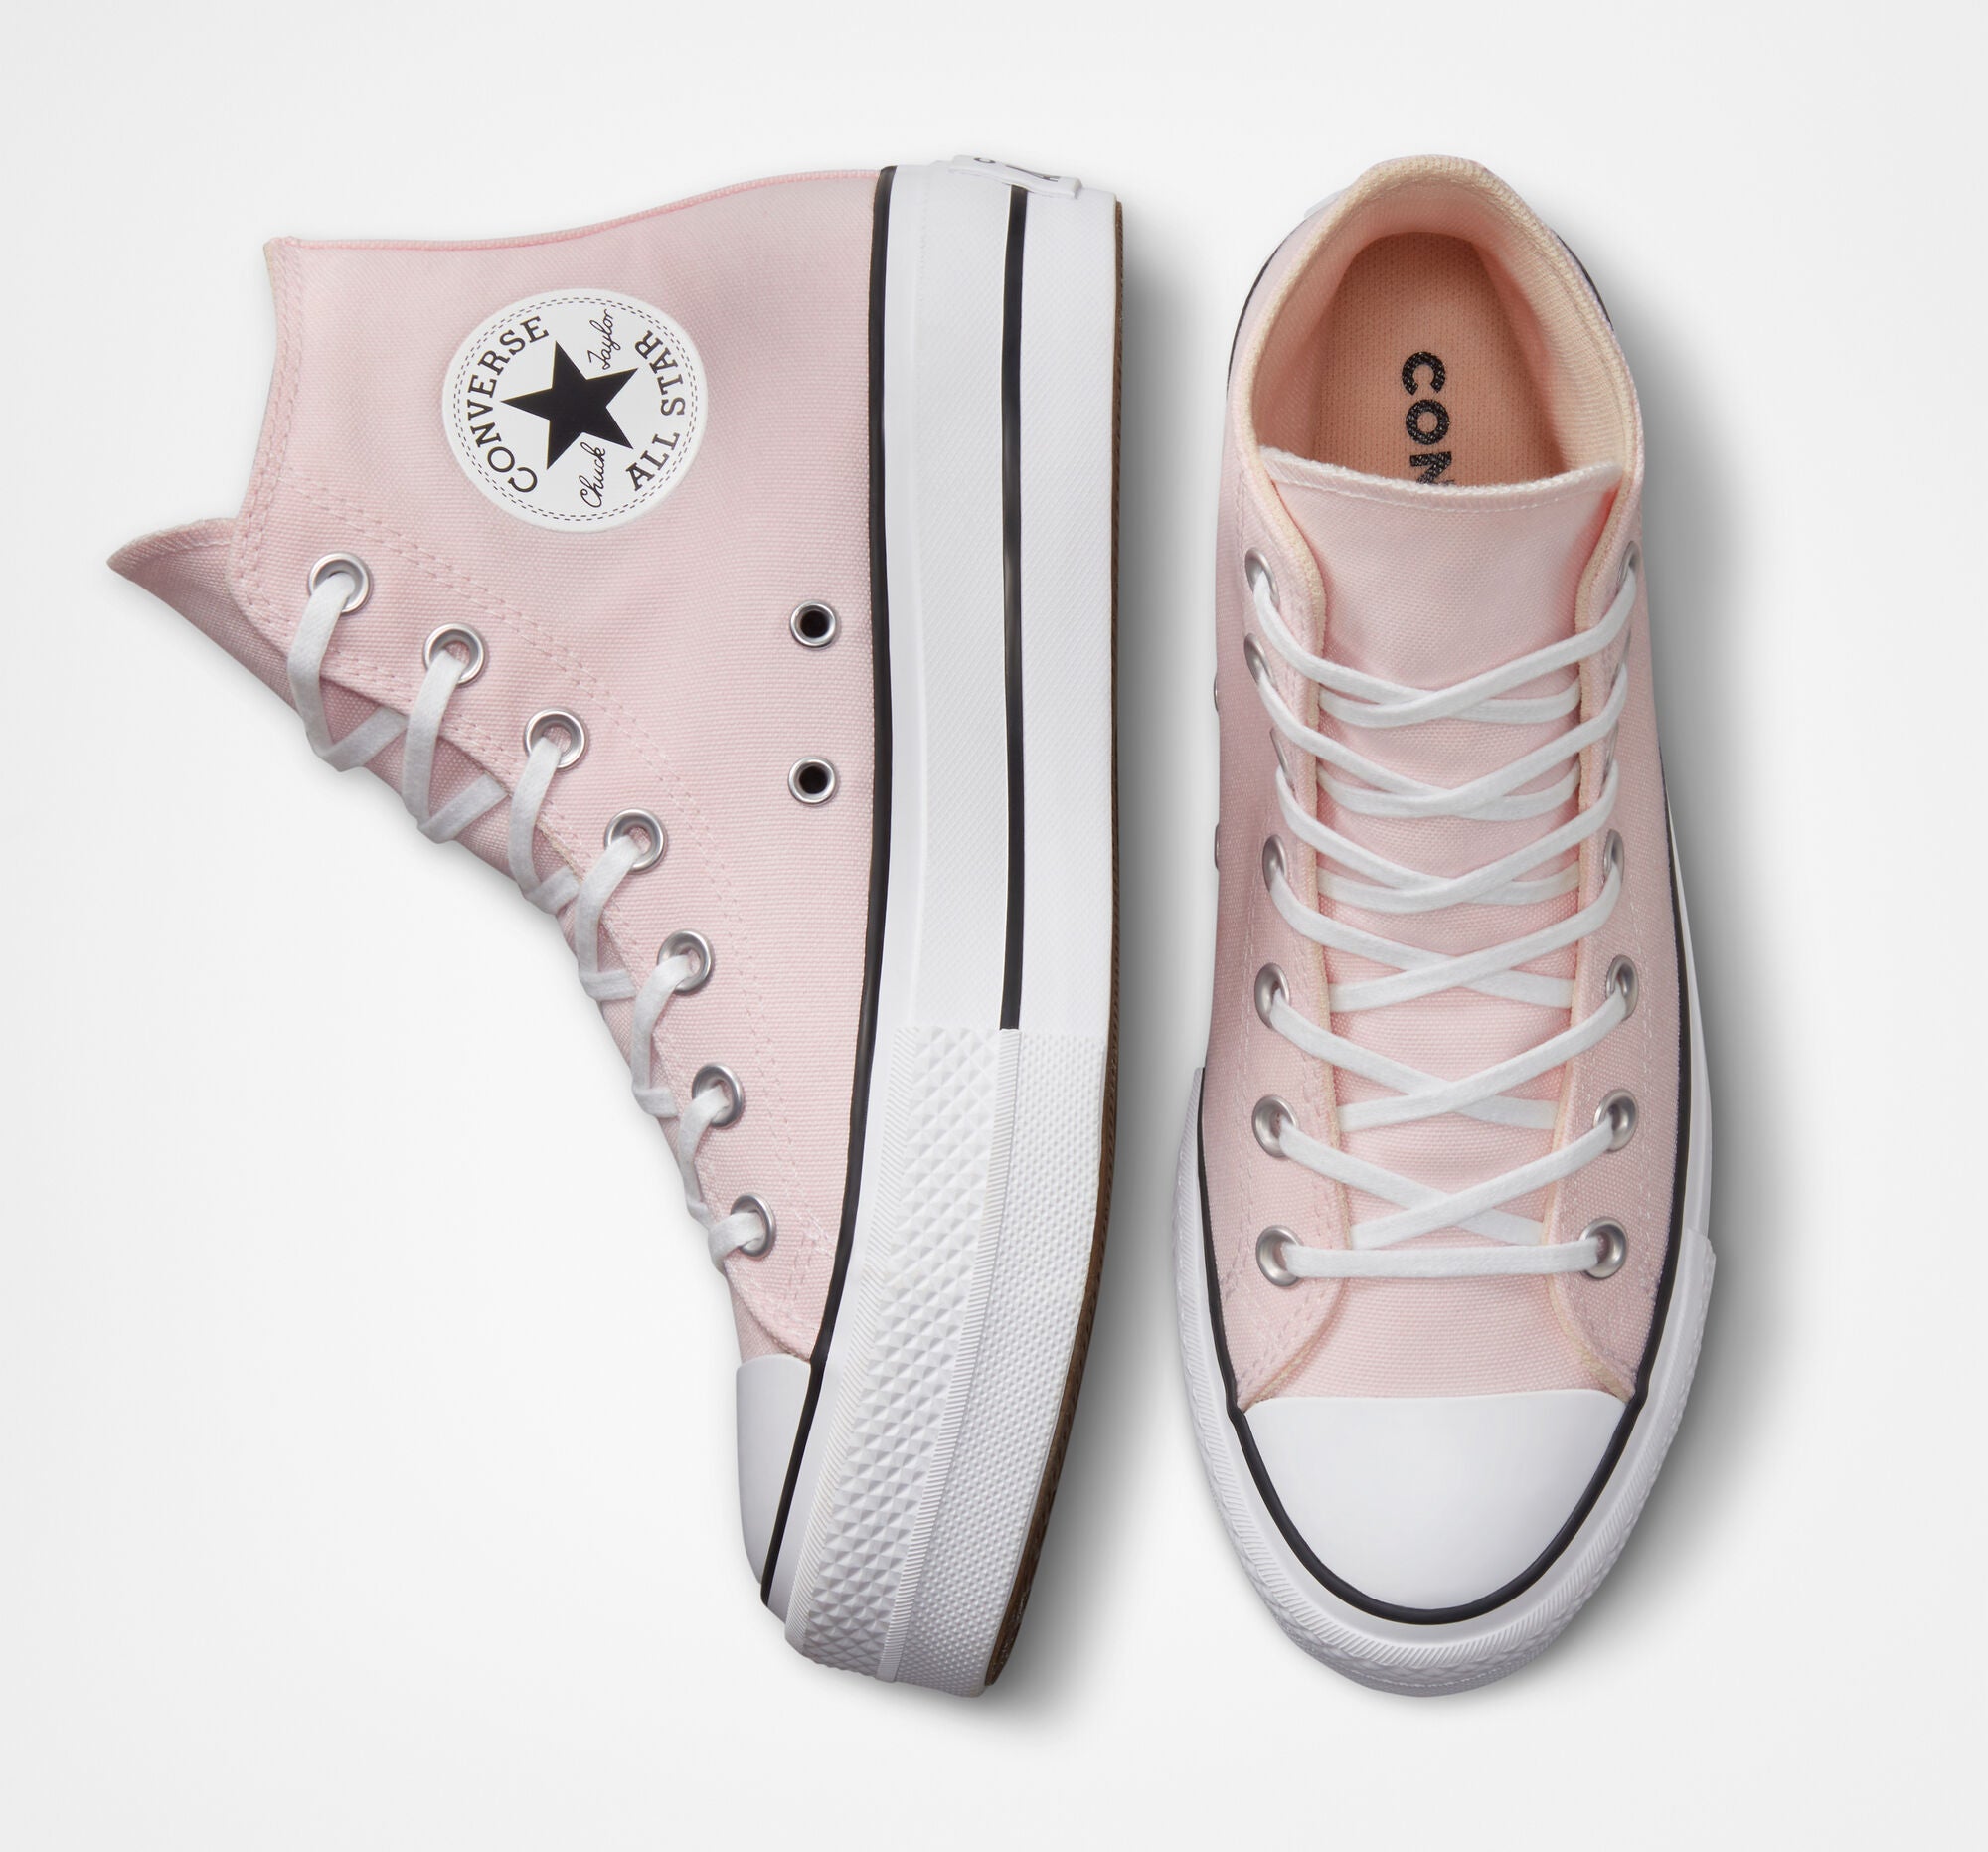 Converse Chuck Taylor All Star Lift Decade Pink High Top Platform Shoes